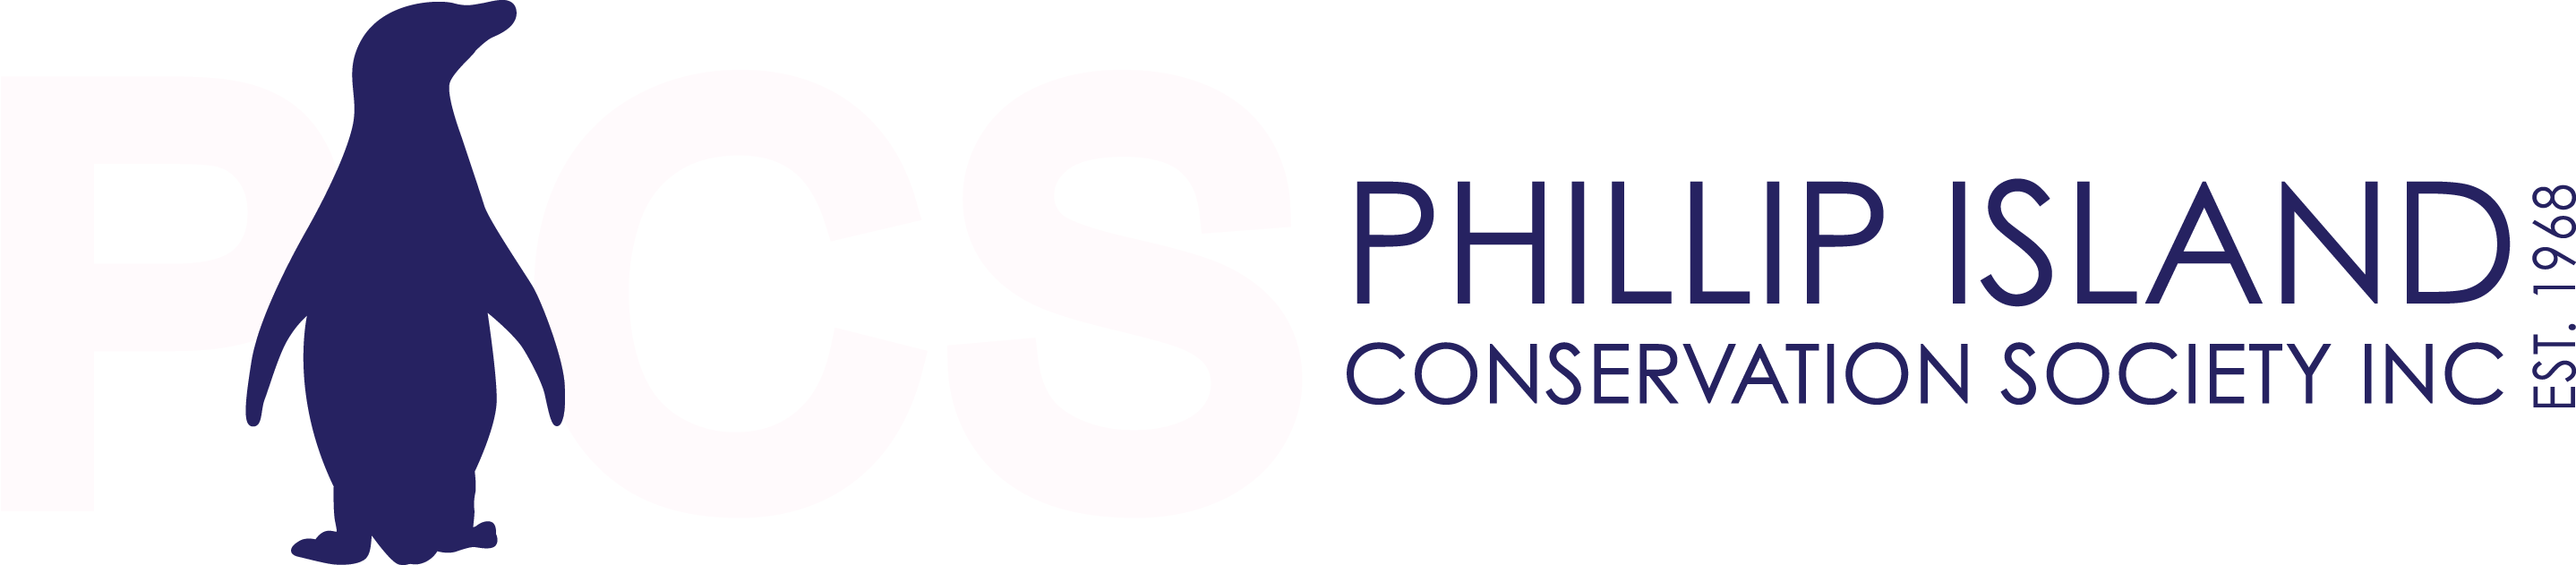 Philip Island Conservation Society